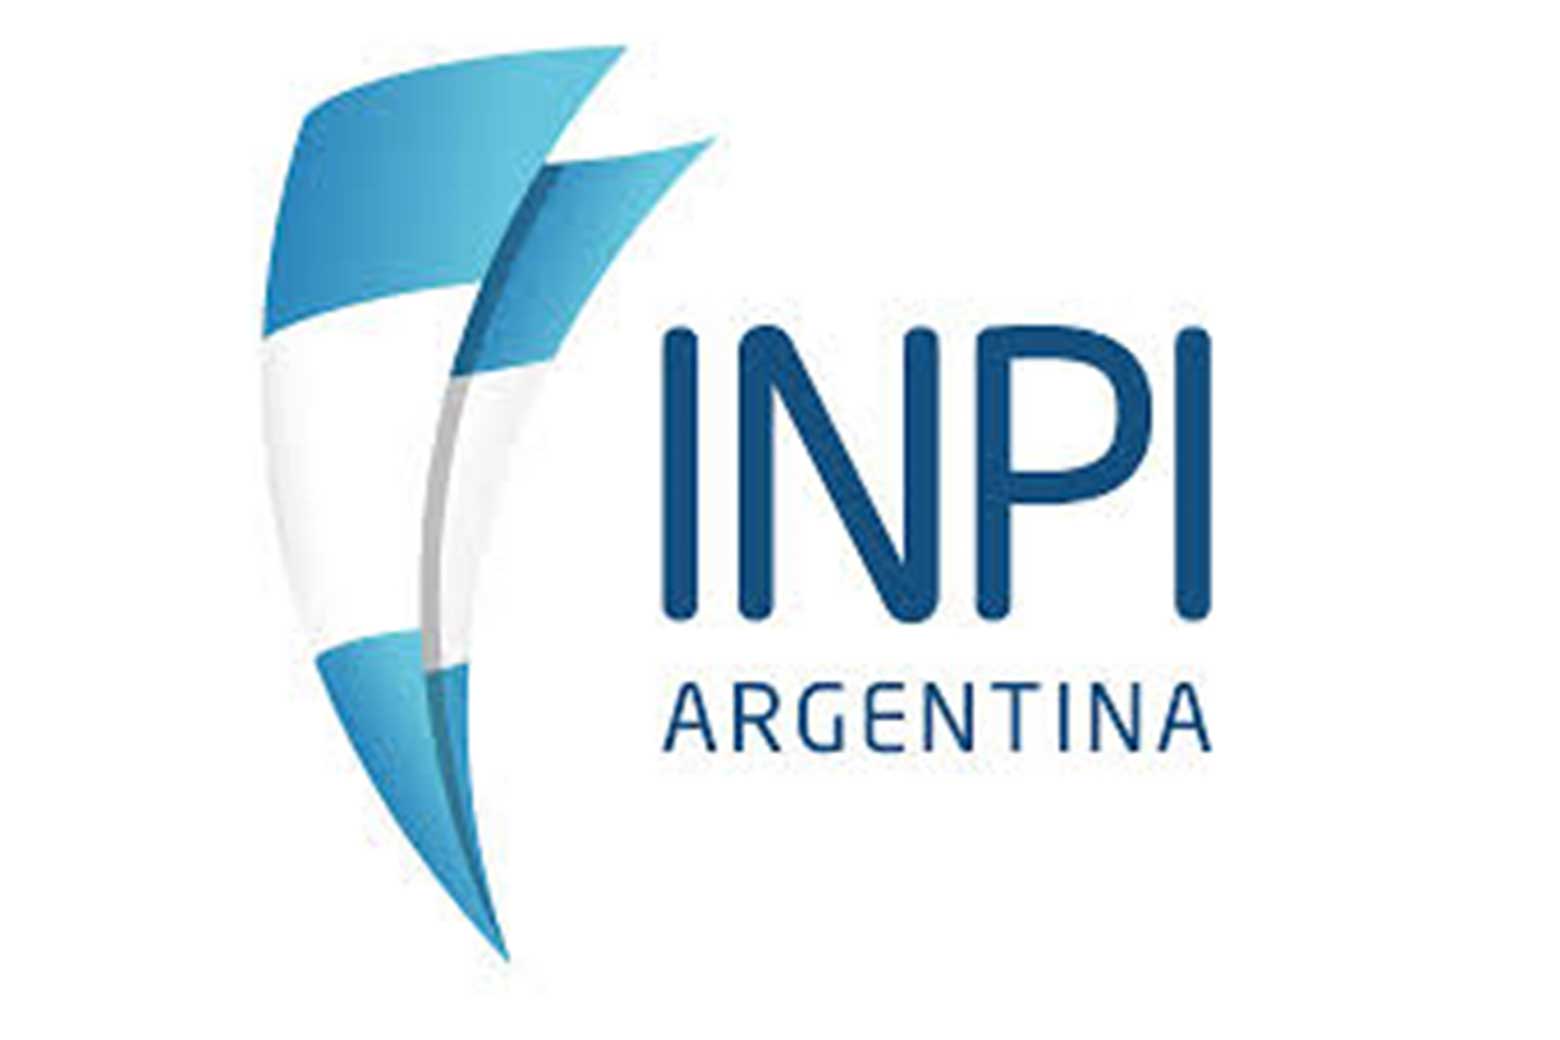 INPI Argentina logo